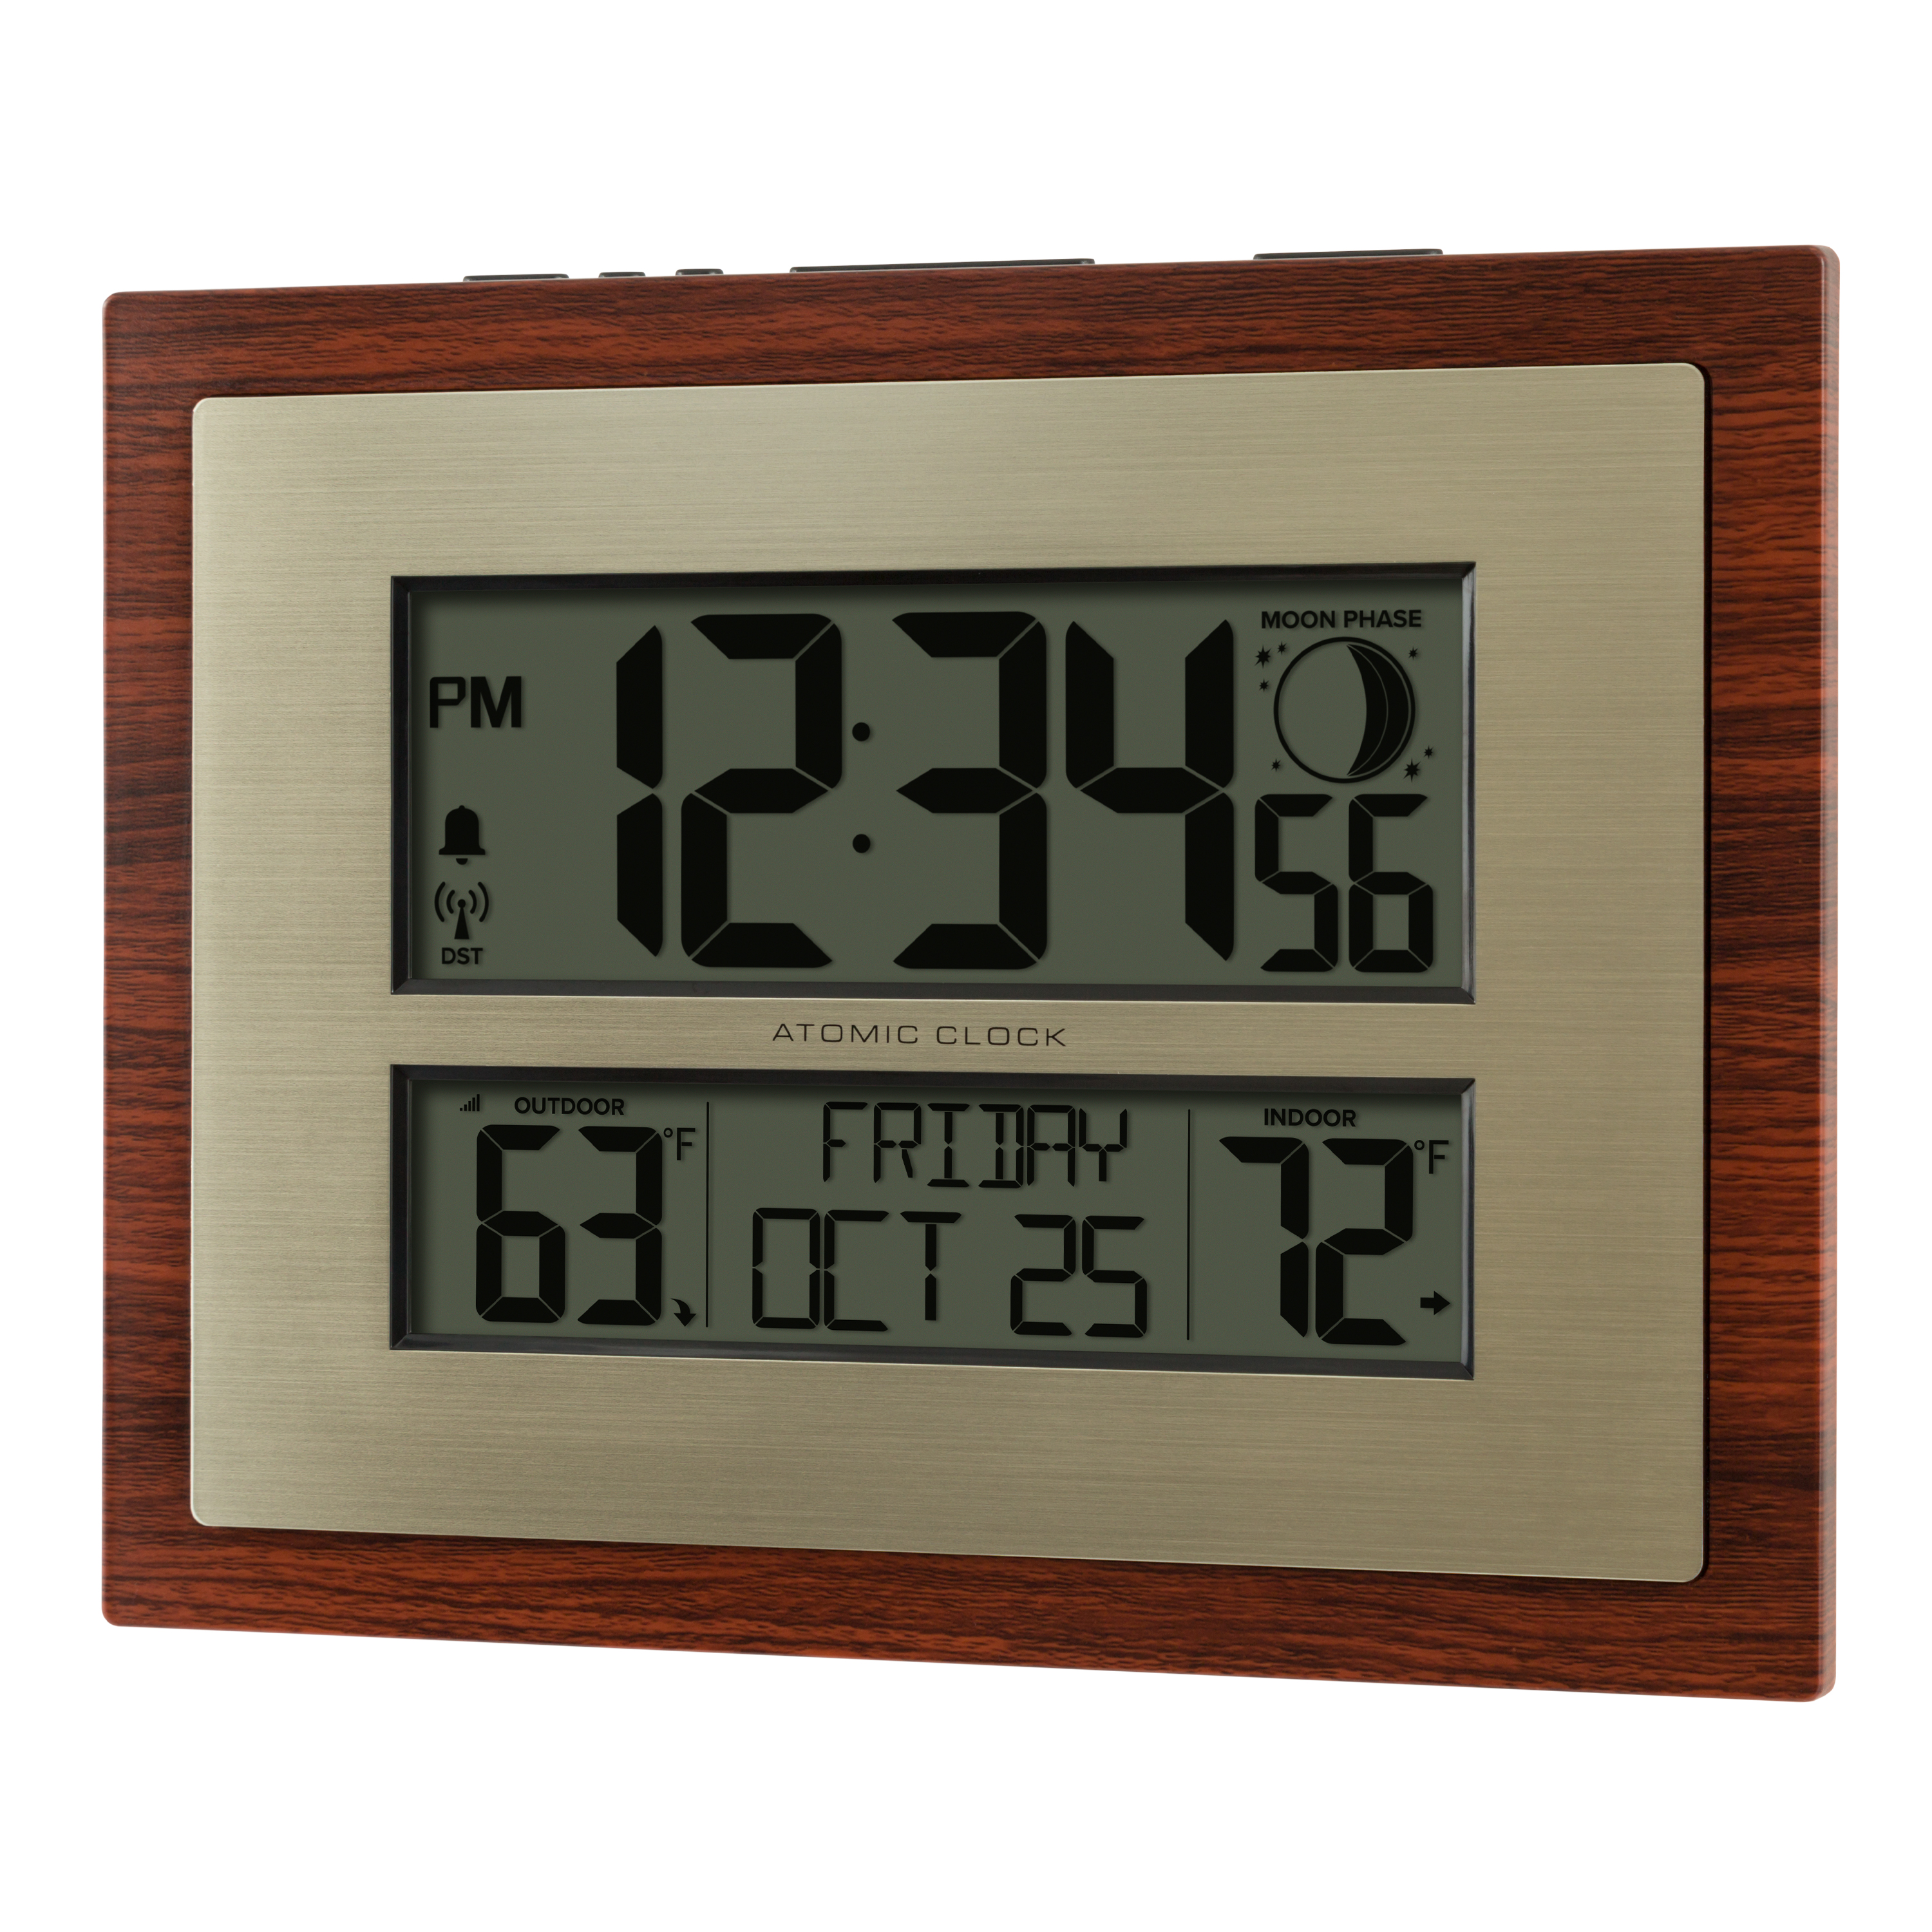 BHG Cherry Finish Modern Digital Atomic Clock with Temperature, W86111 - image 2 of 9